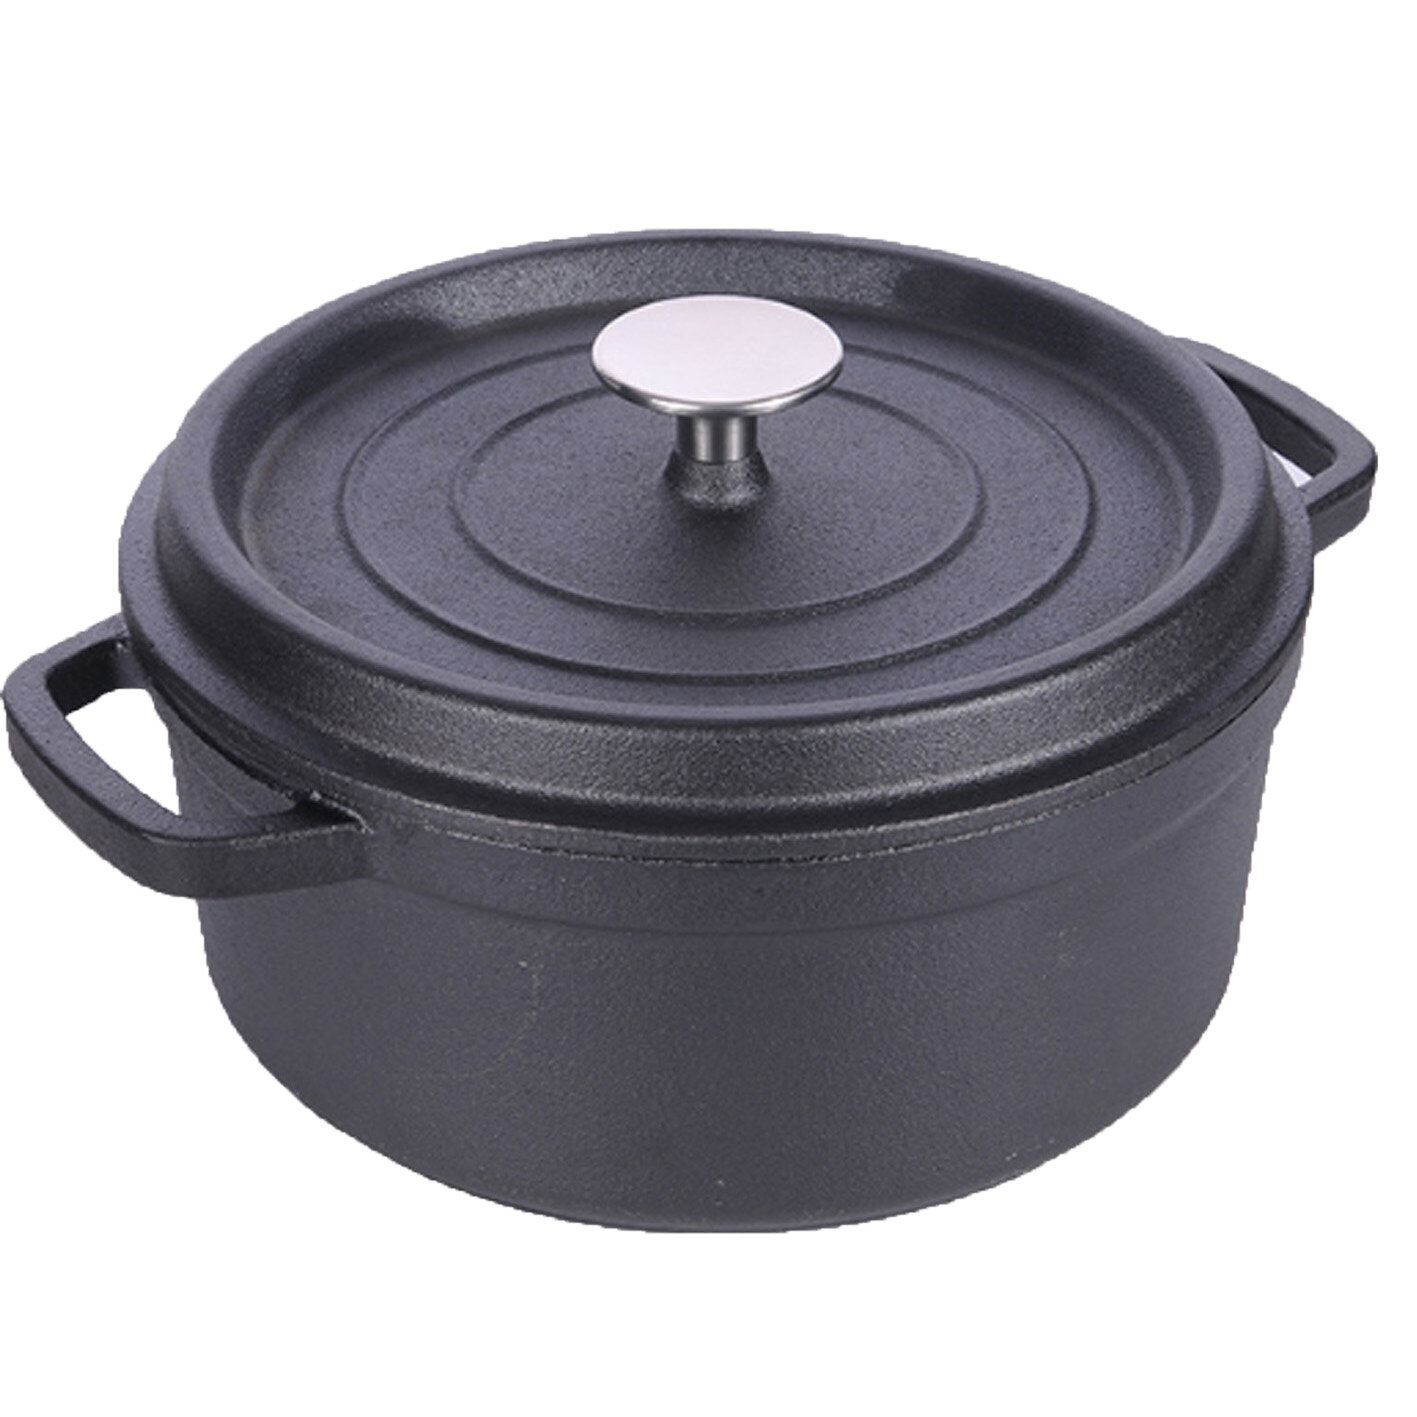 Crock-Pot Artisan 3 Qt. Enameled Cast Iron Dutch Oven with Li